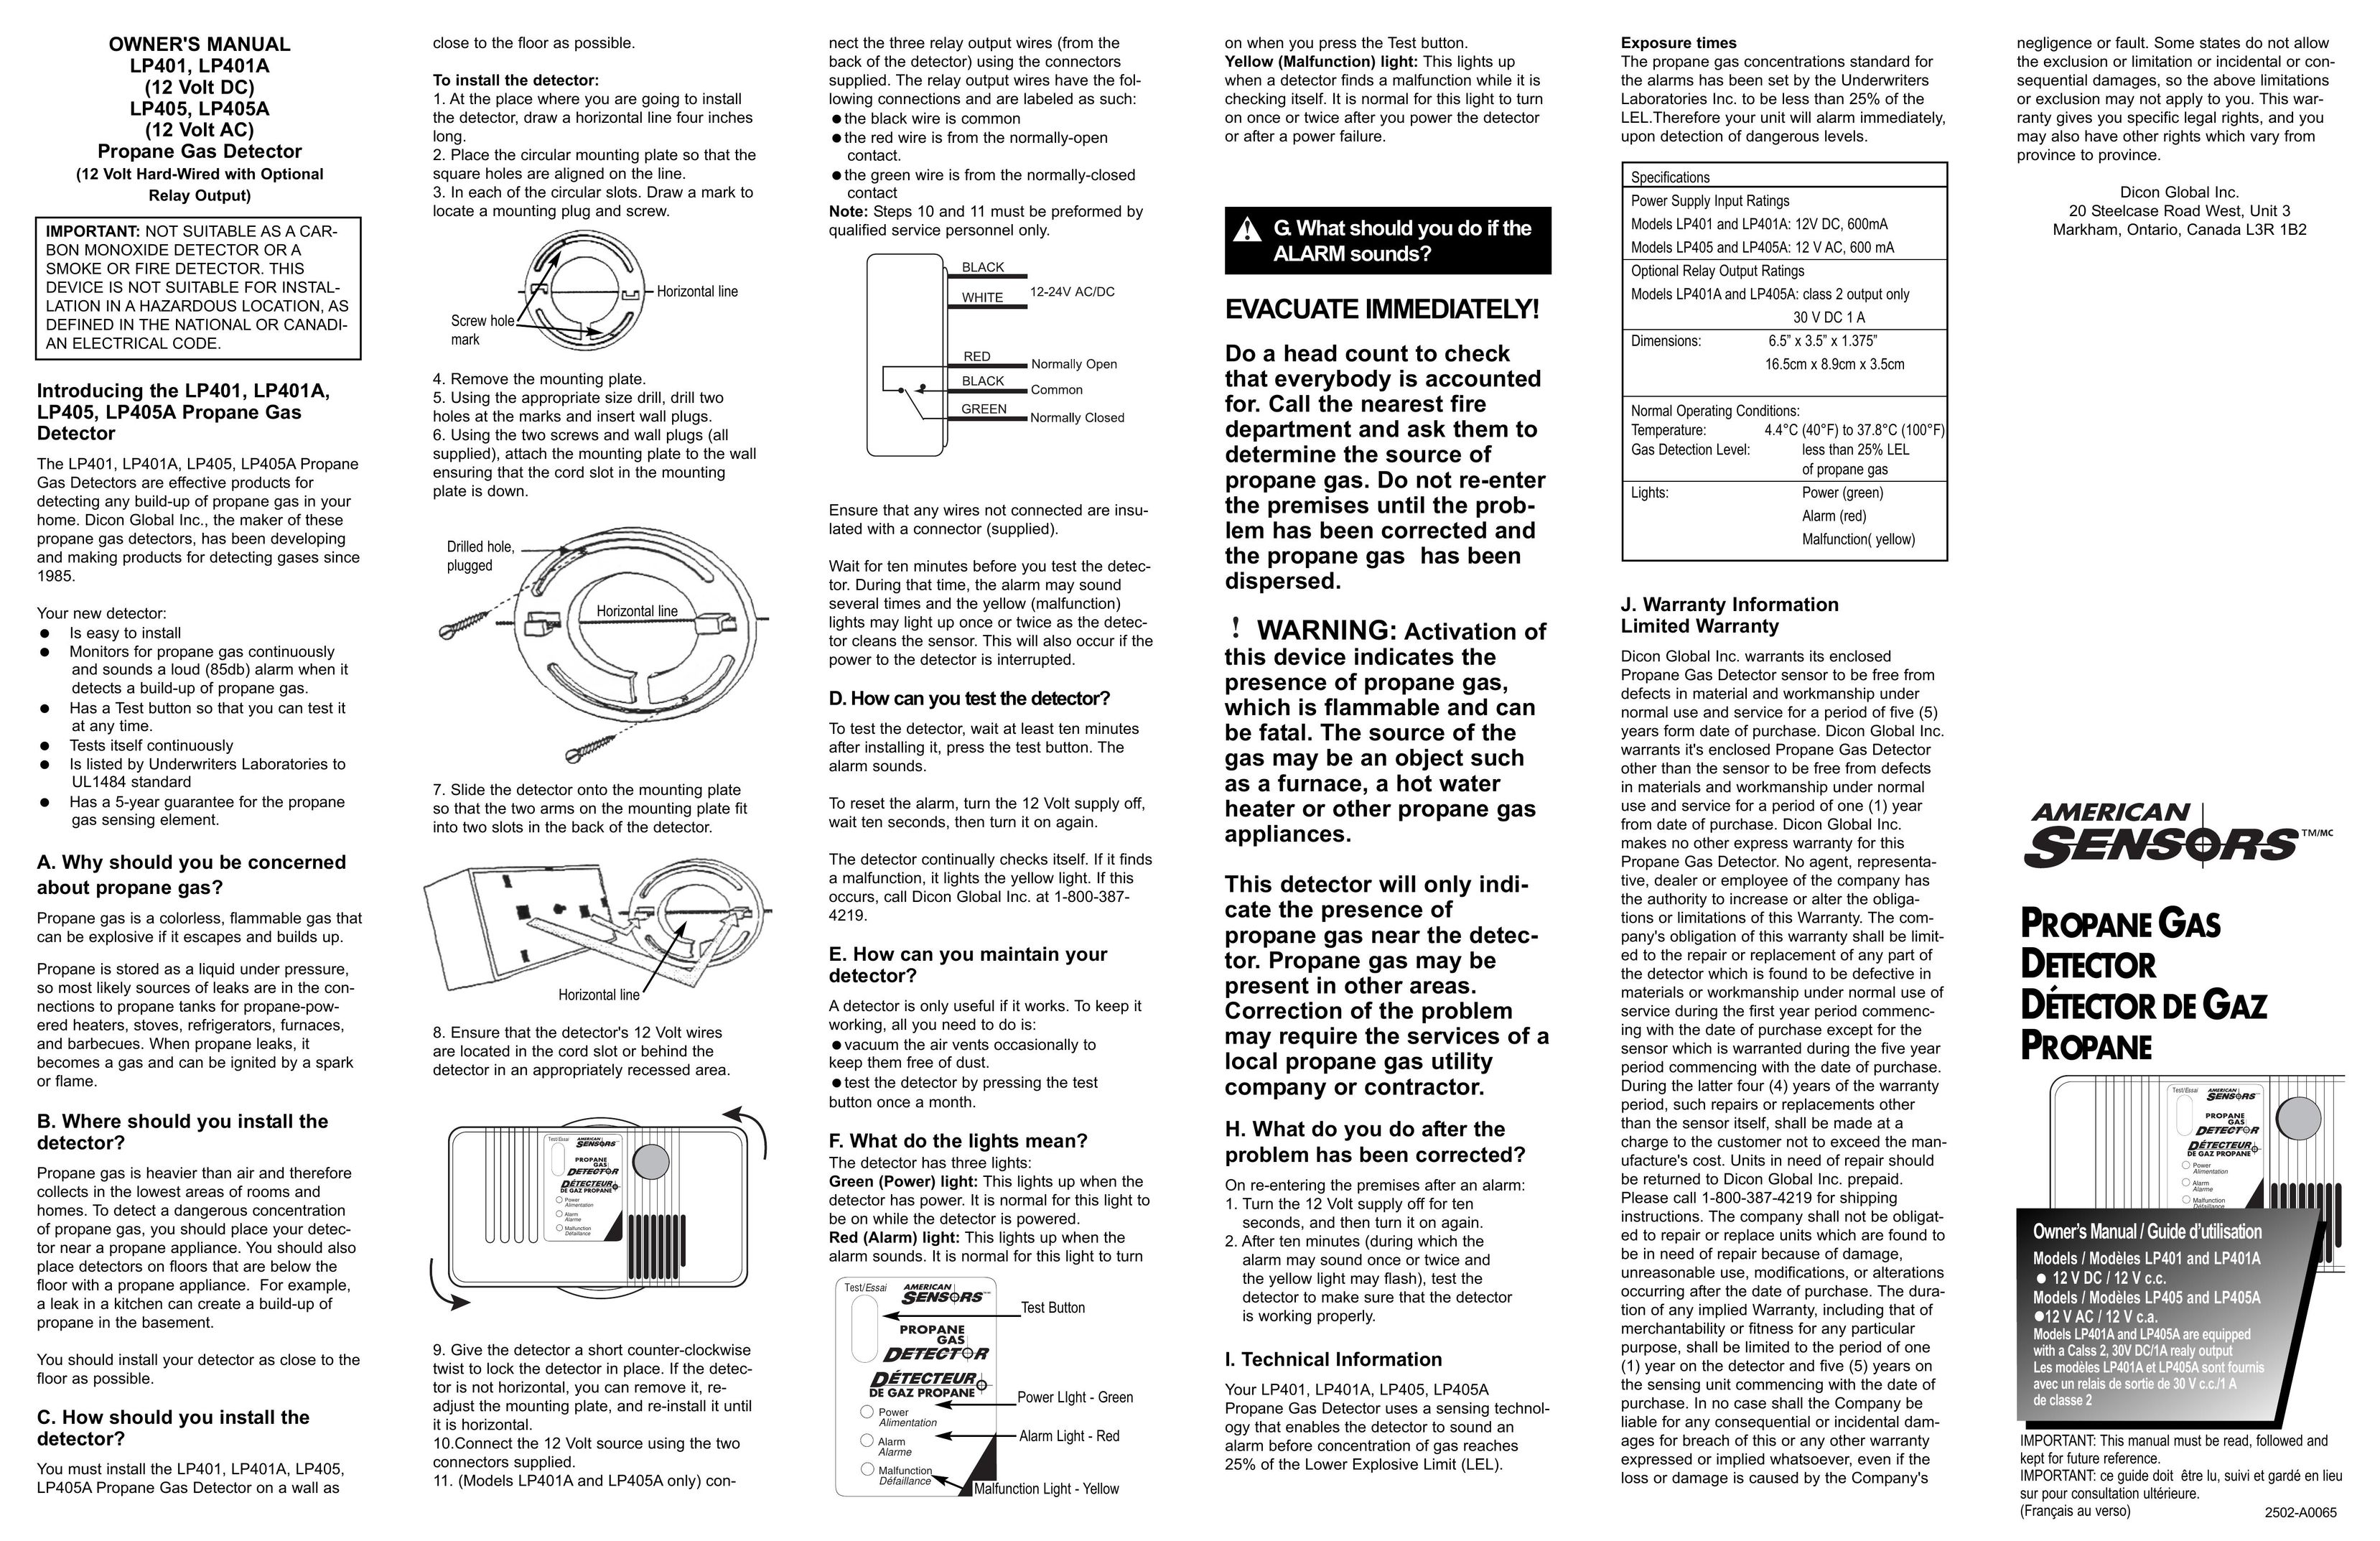 American Sensor LP401 Carbon Monoxide Alarm User Manual